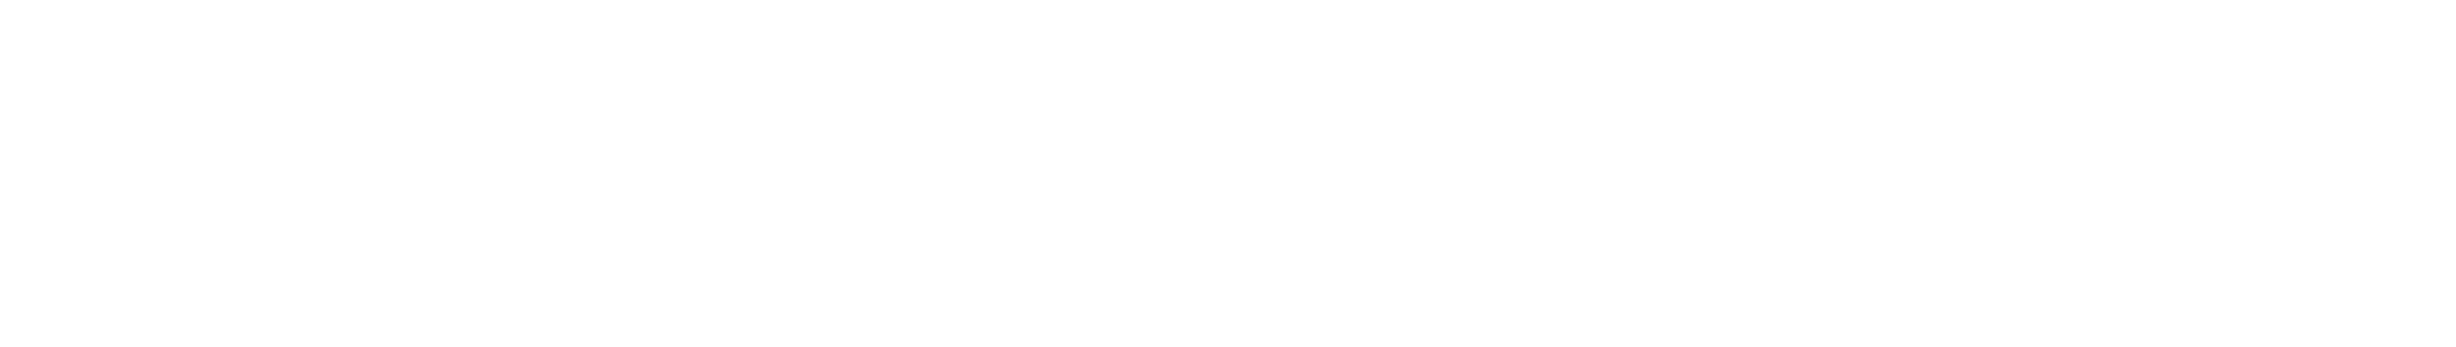 paper-star